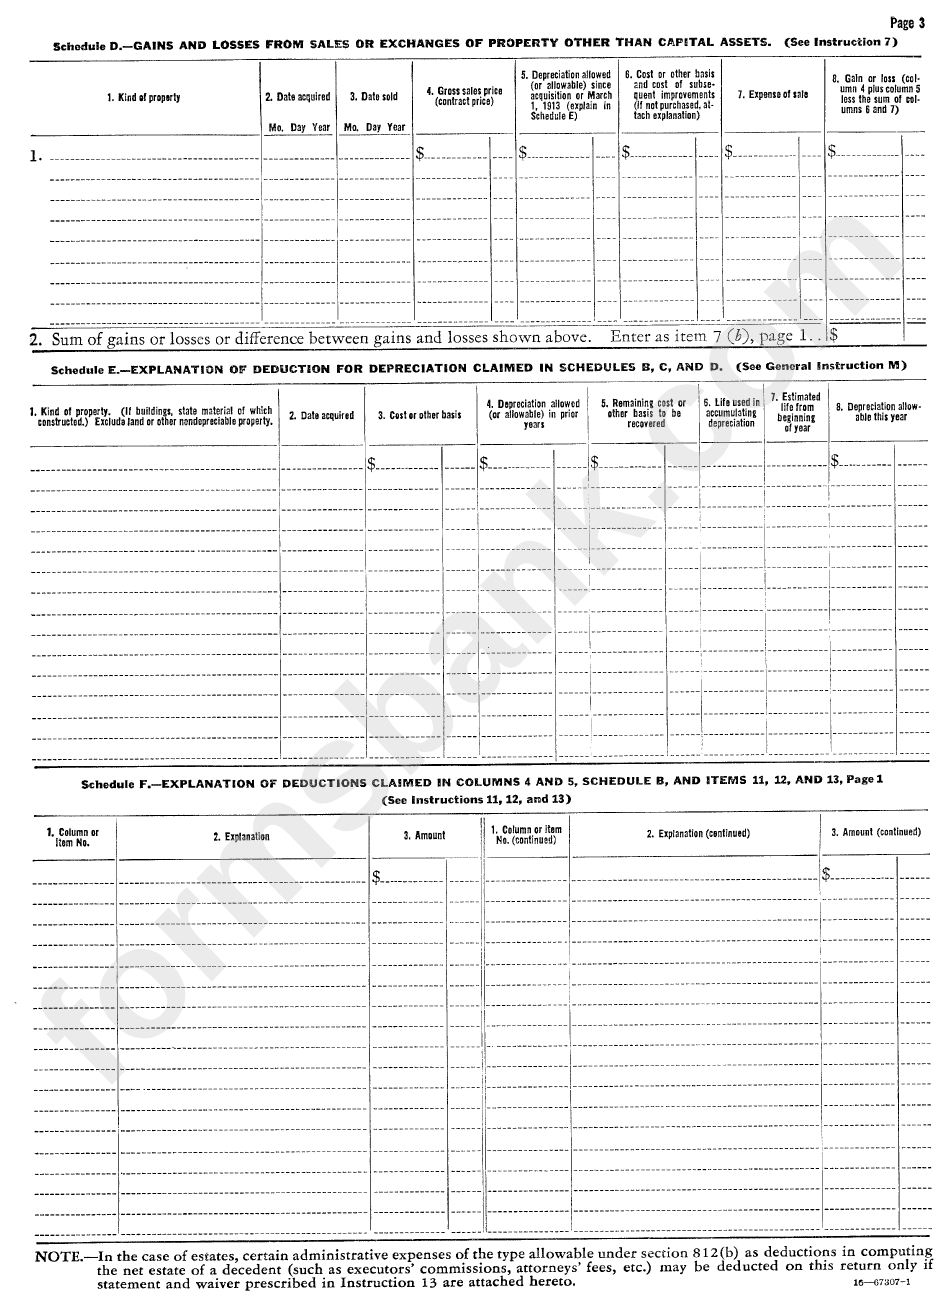 Form 1041 - U.s. Fiduciary Income Tax Return (For Estates And Trusts) - 1952